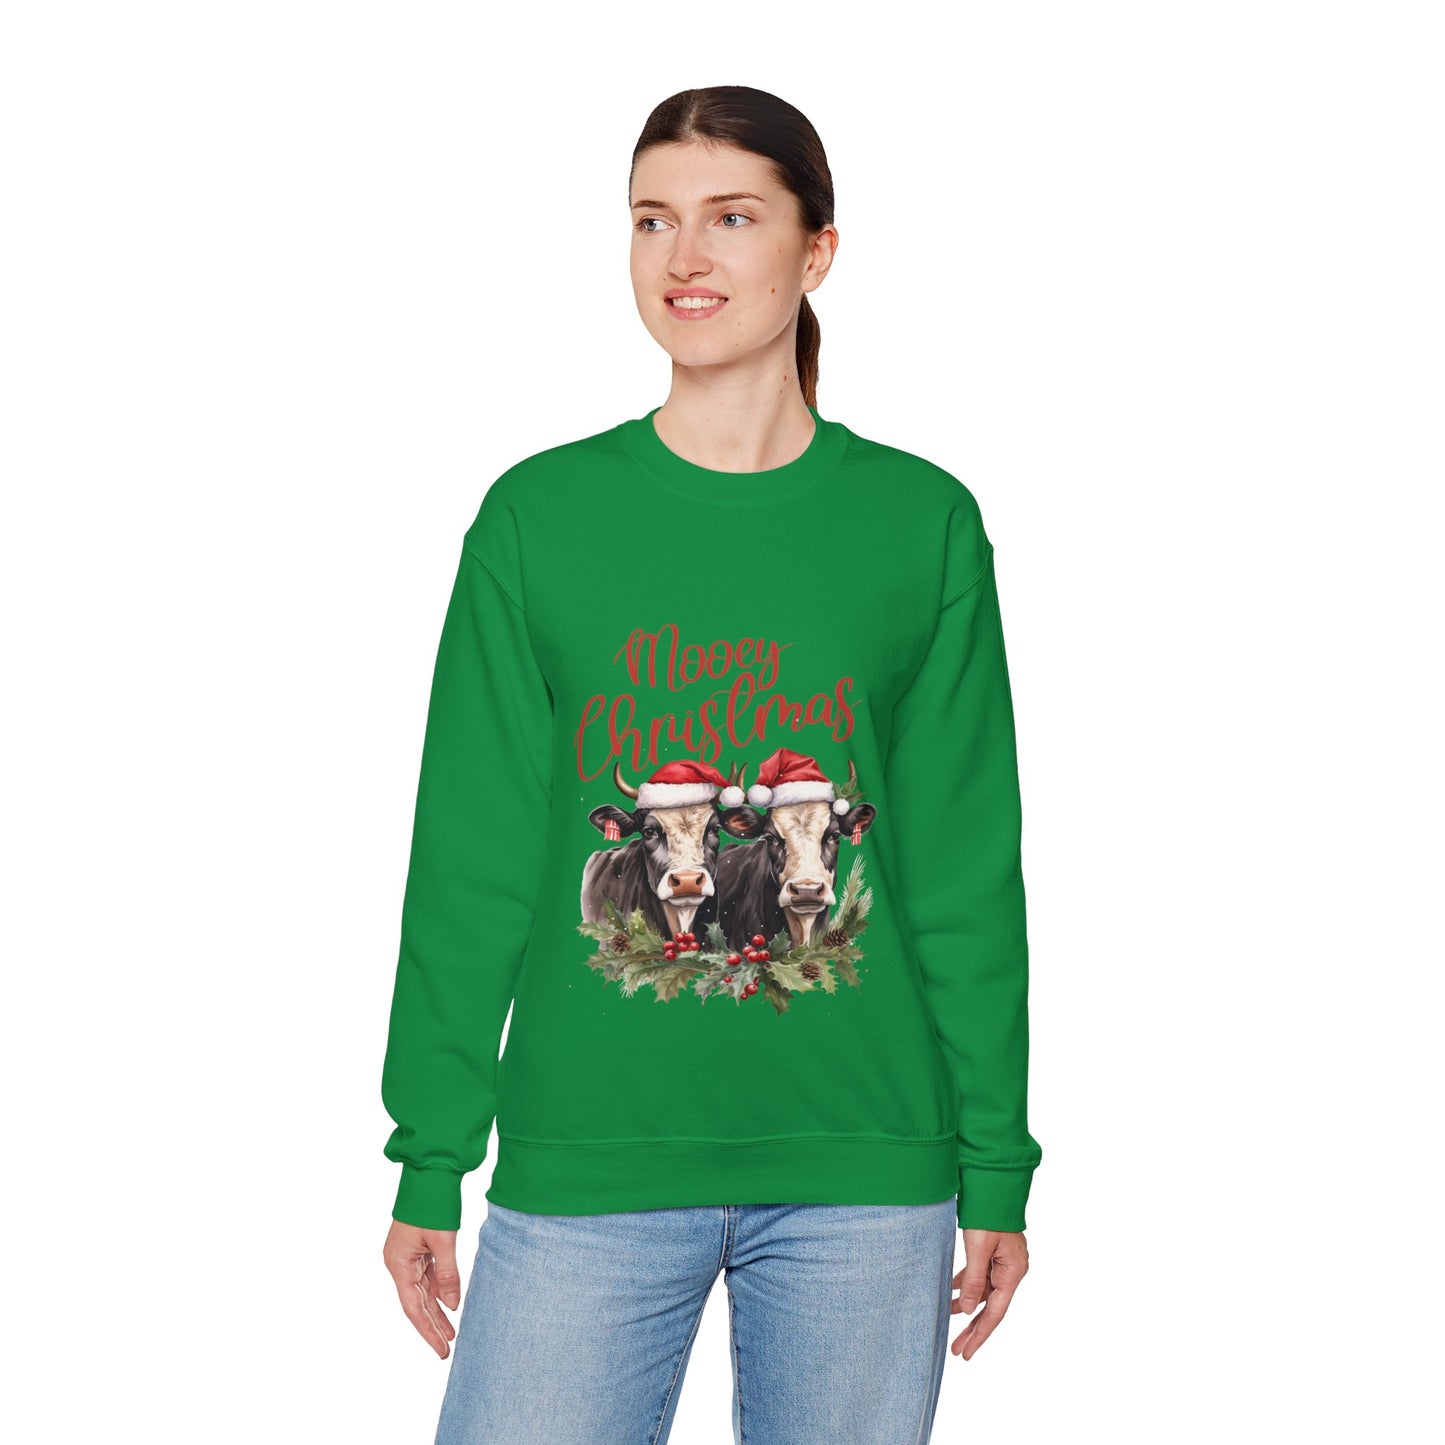 Mooey Christmas - Unisex Heavy Blend™ Crewneck Sweatshirt